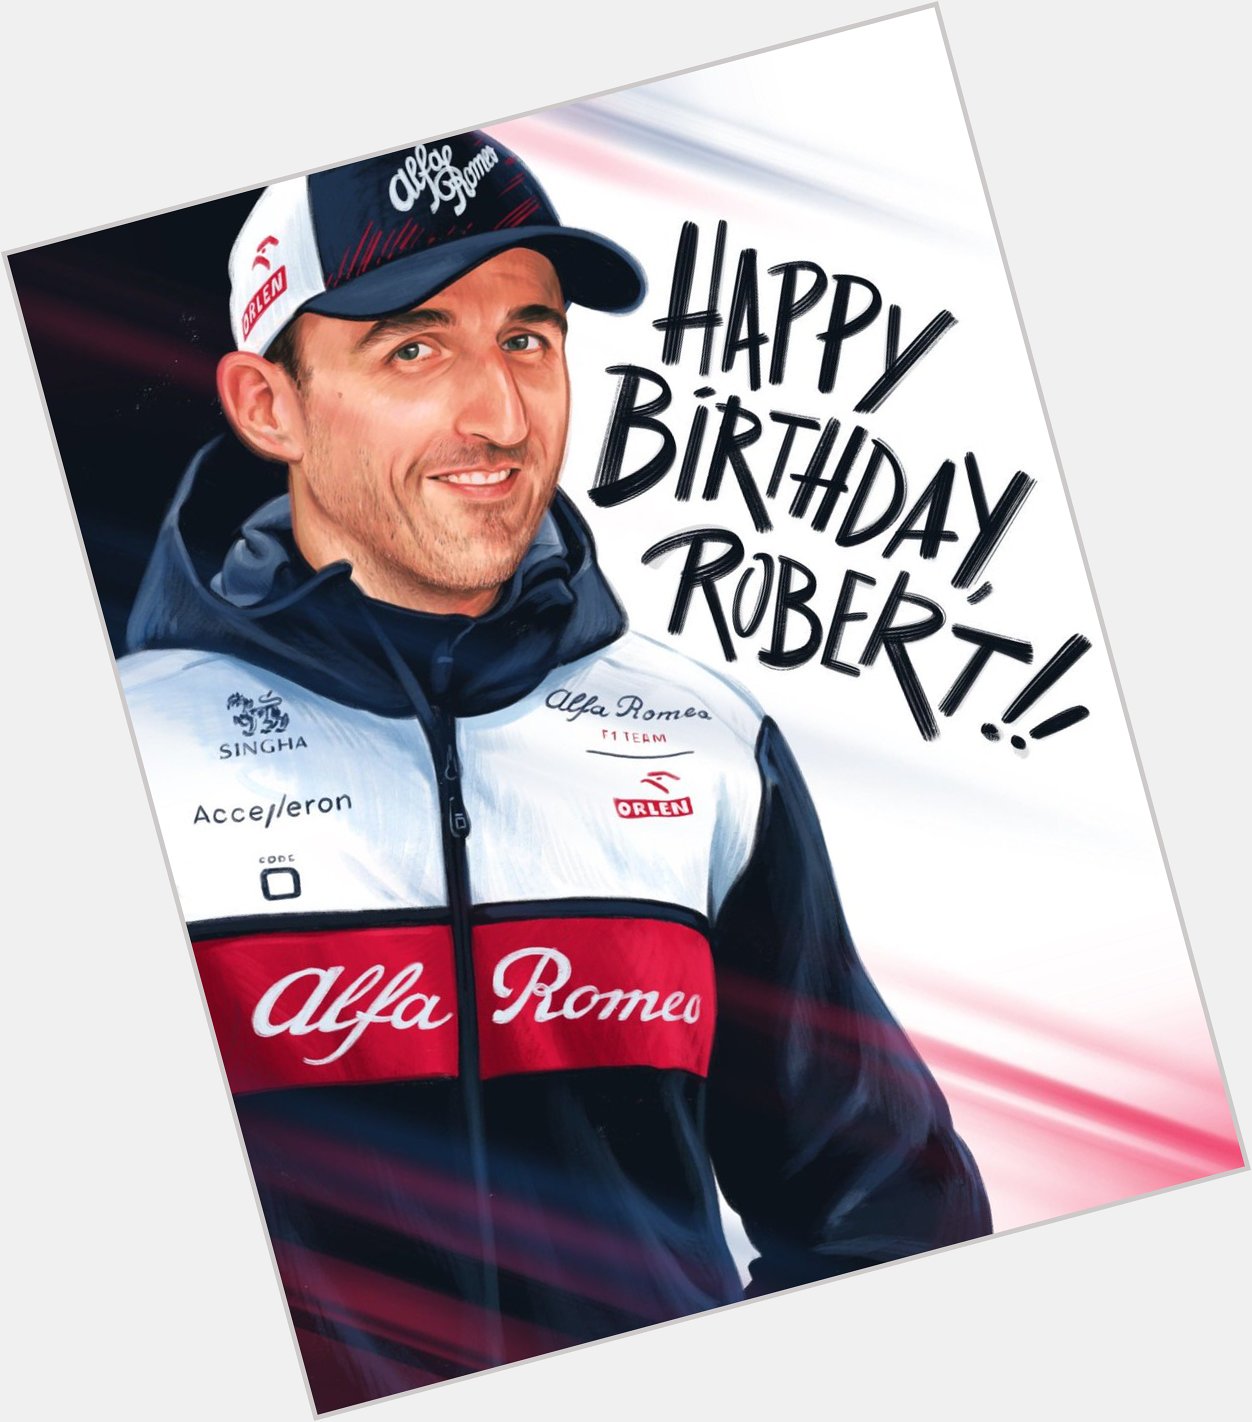 Wishing a very happy birthday to Robert Kubica today! 